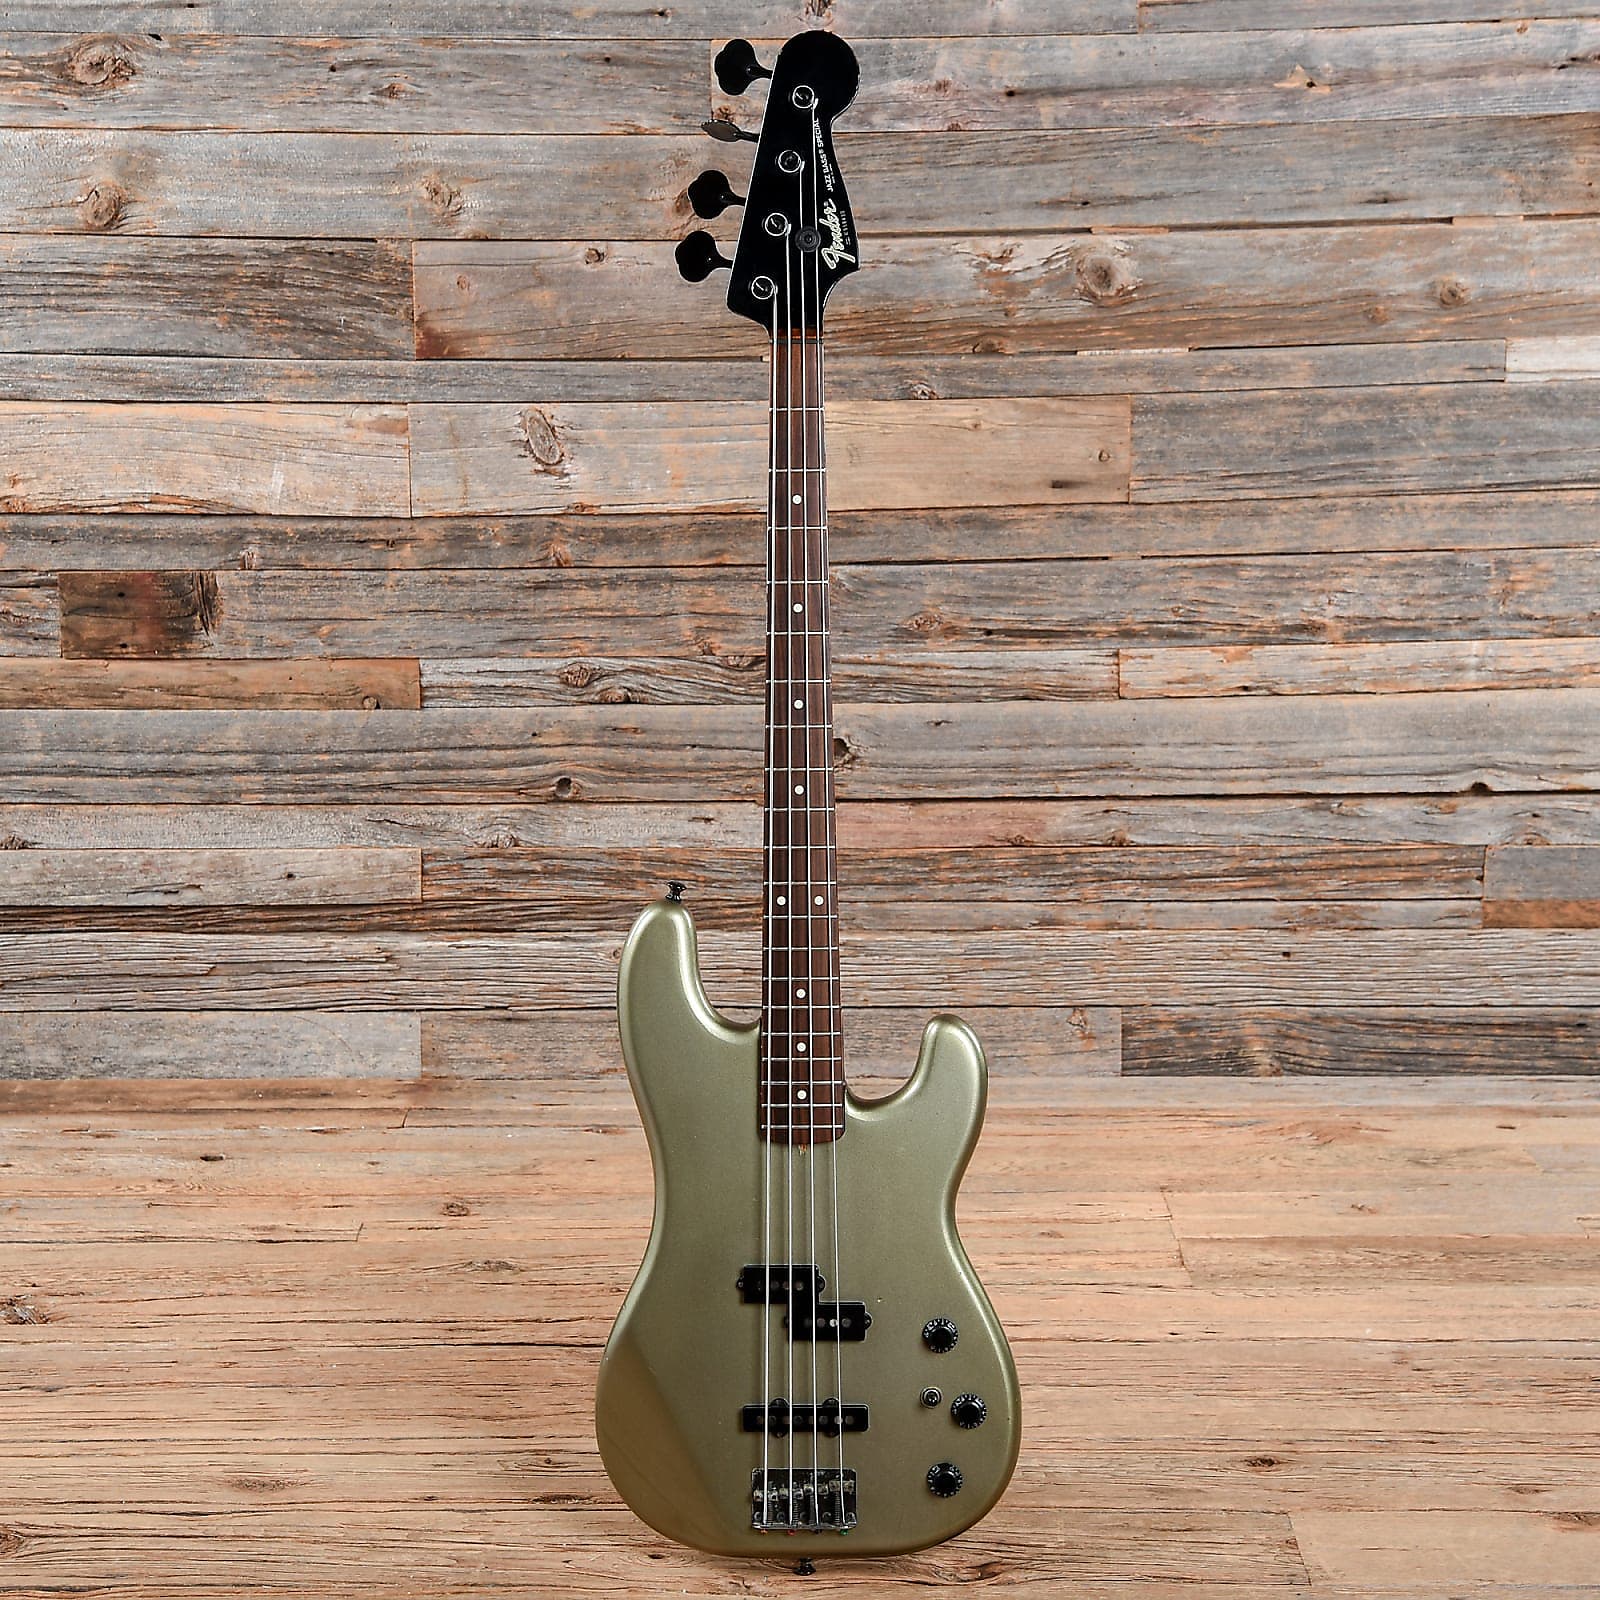 Fender Jazz Bass Spacial PJ-535 80年代モノレア-